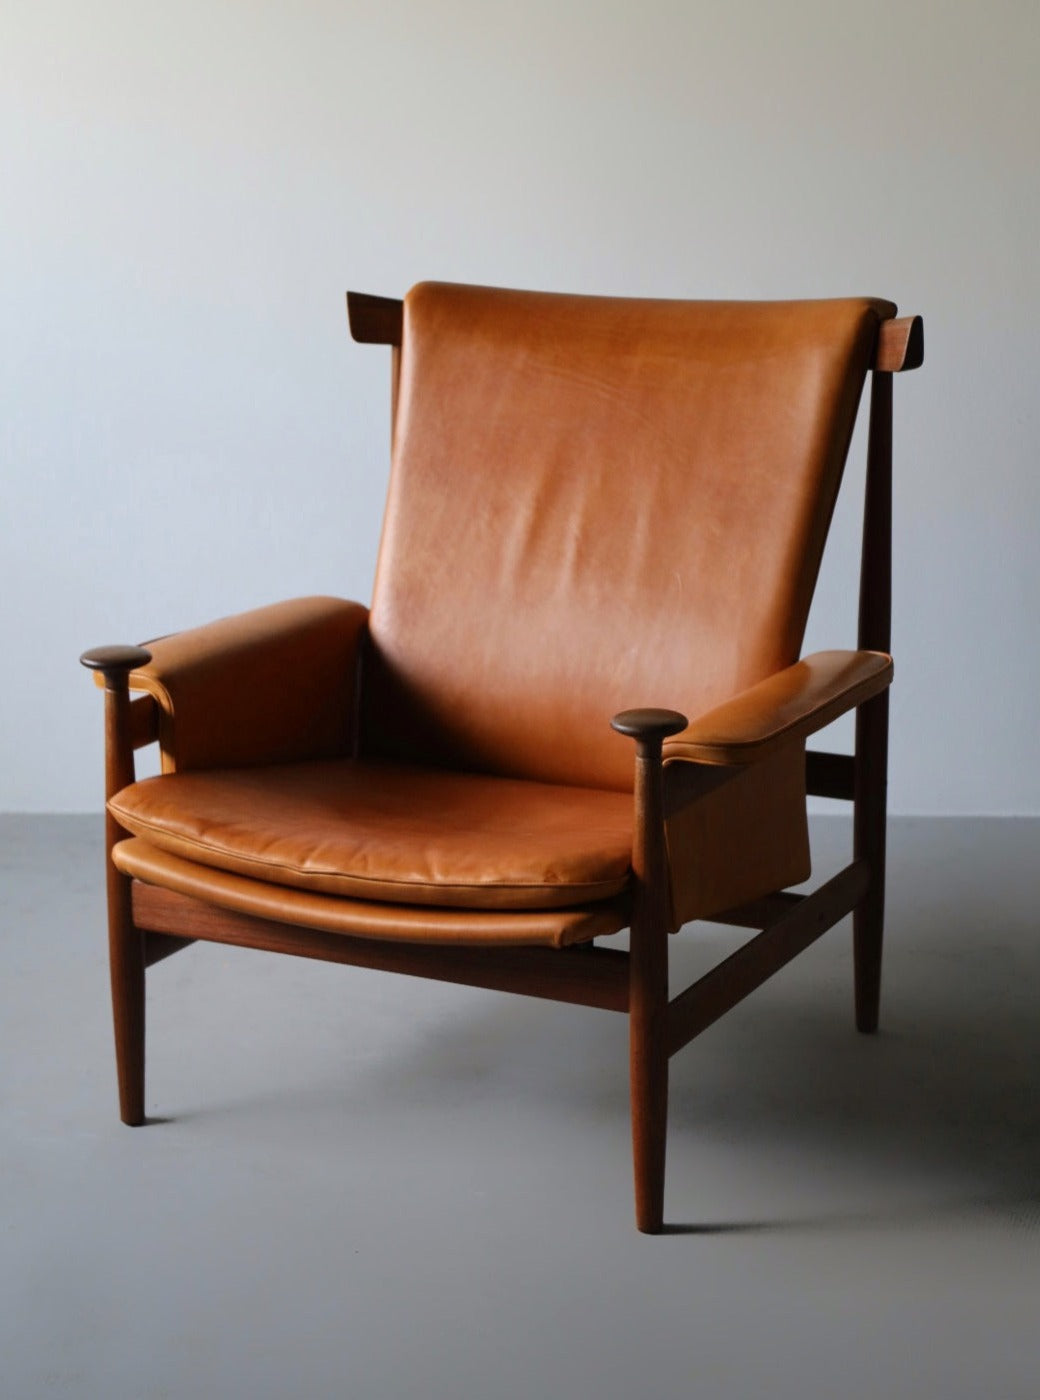 Bwana chair by Finn Juhl for France & Søn, Denmark 1962